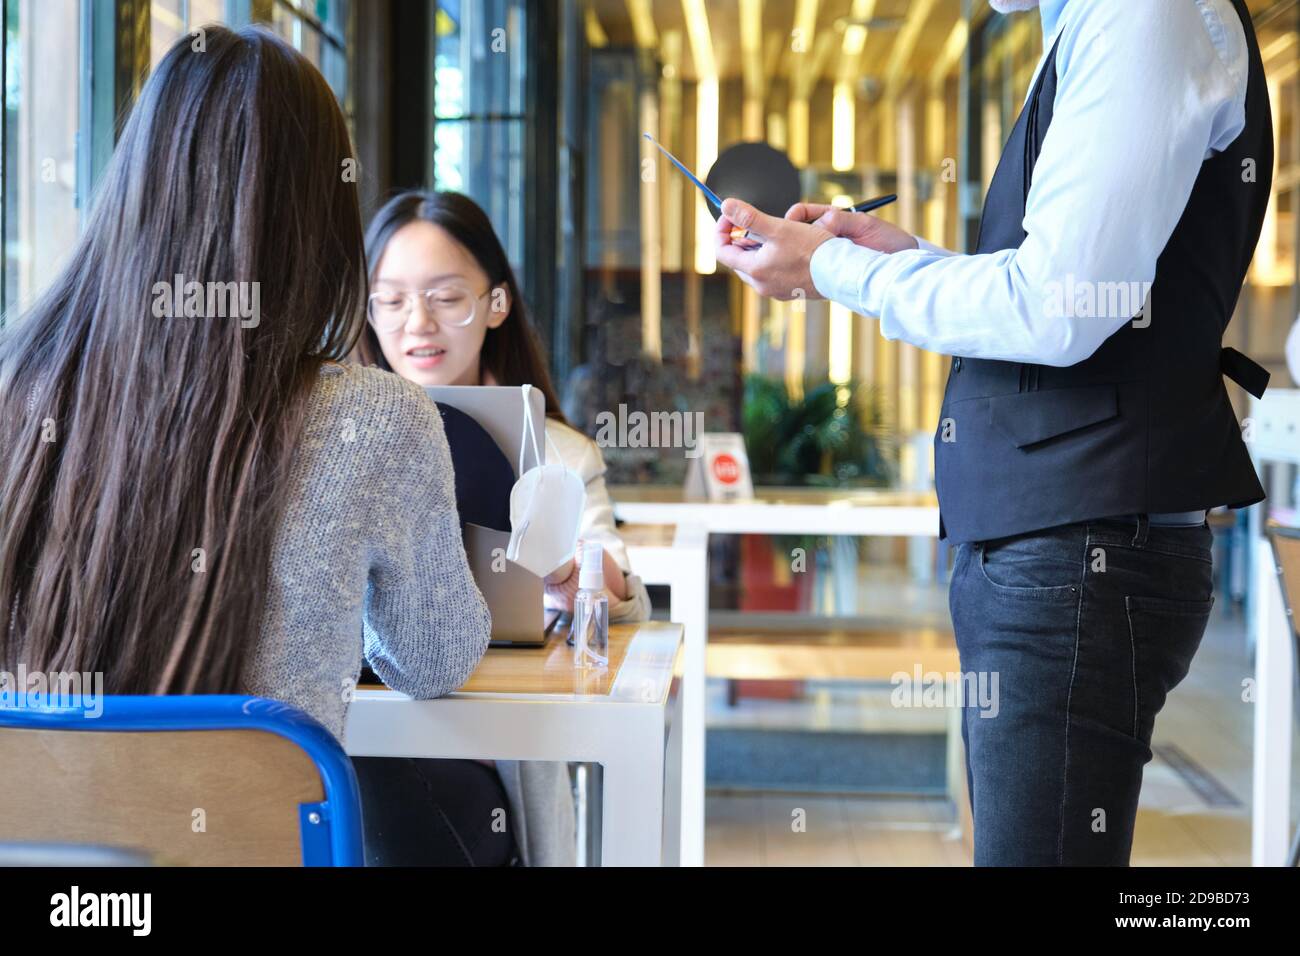 Caucasian waiter taking clients order in a restaurant during coronavirus outbreak. New normal in restaurants. Coronavirus pandemic. Stock Photo